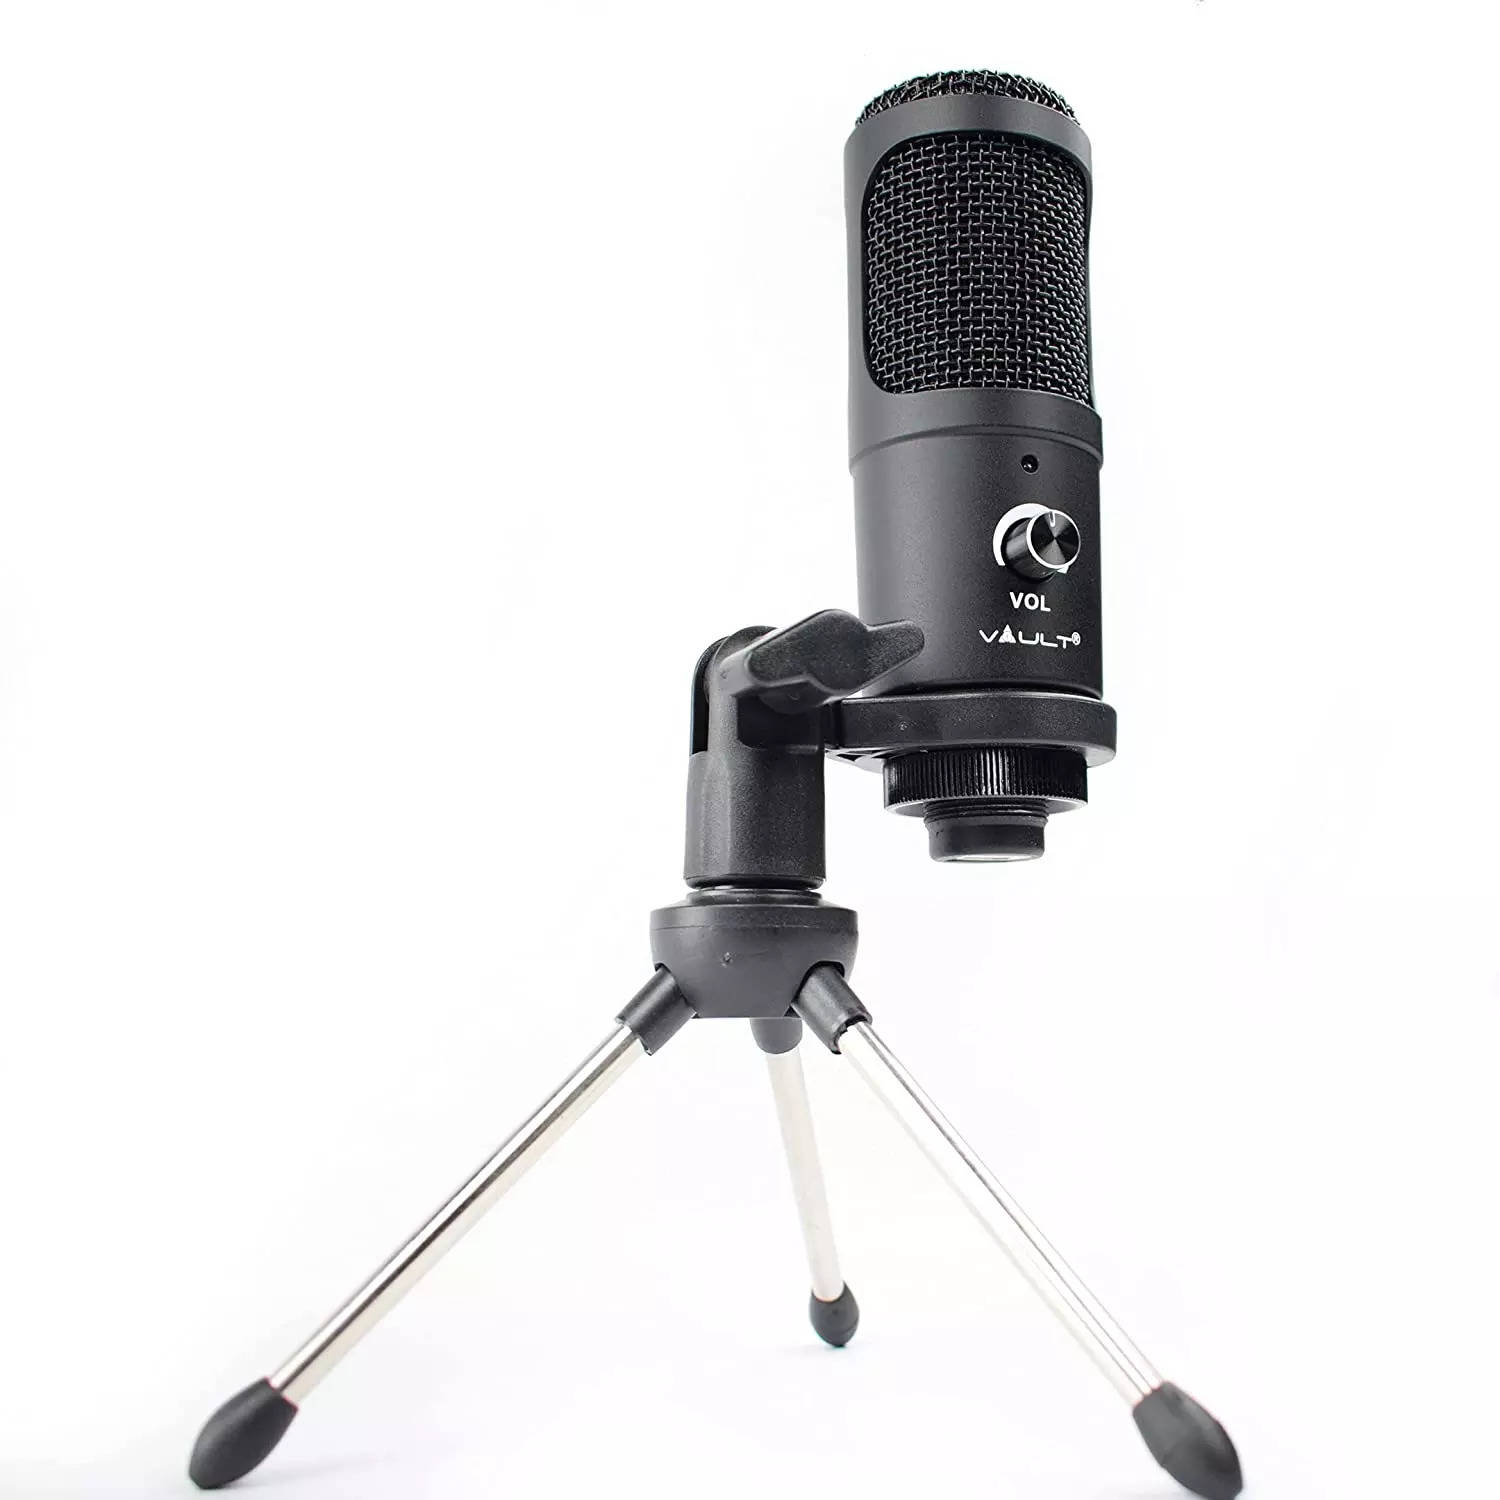 Buy Vault UCM USB Condenser Podcast Microphone Kit - High